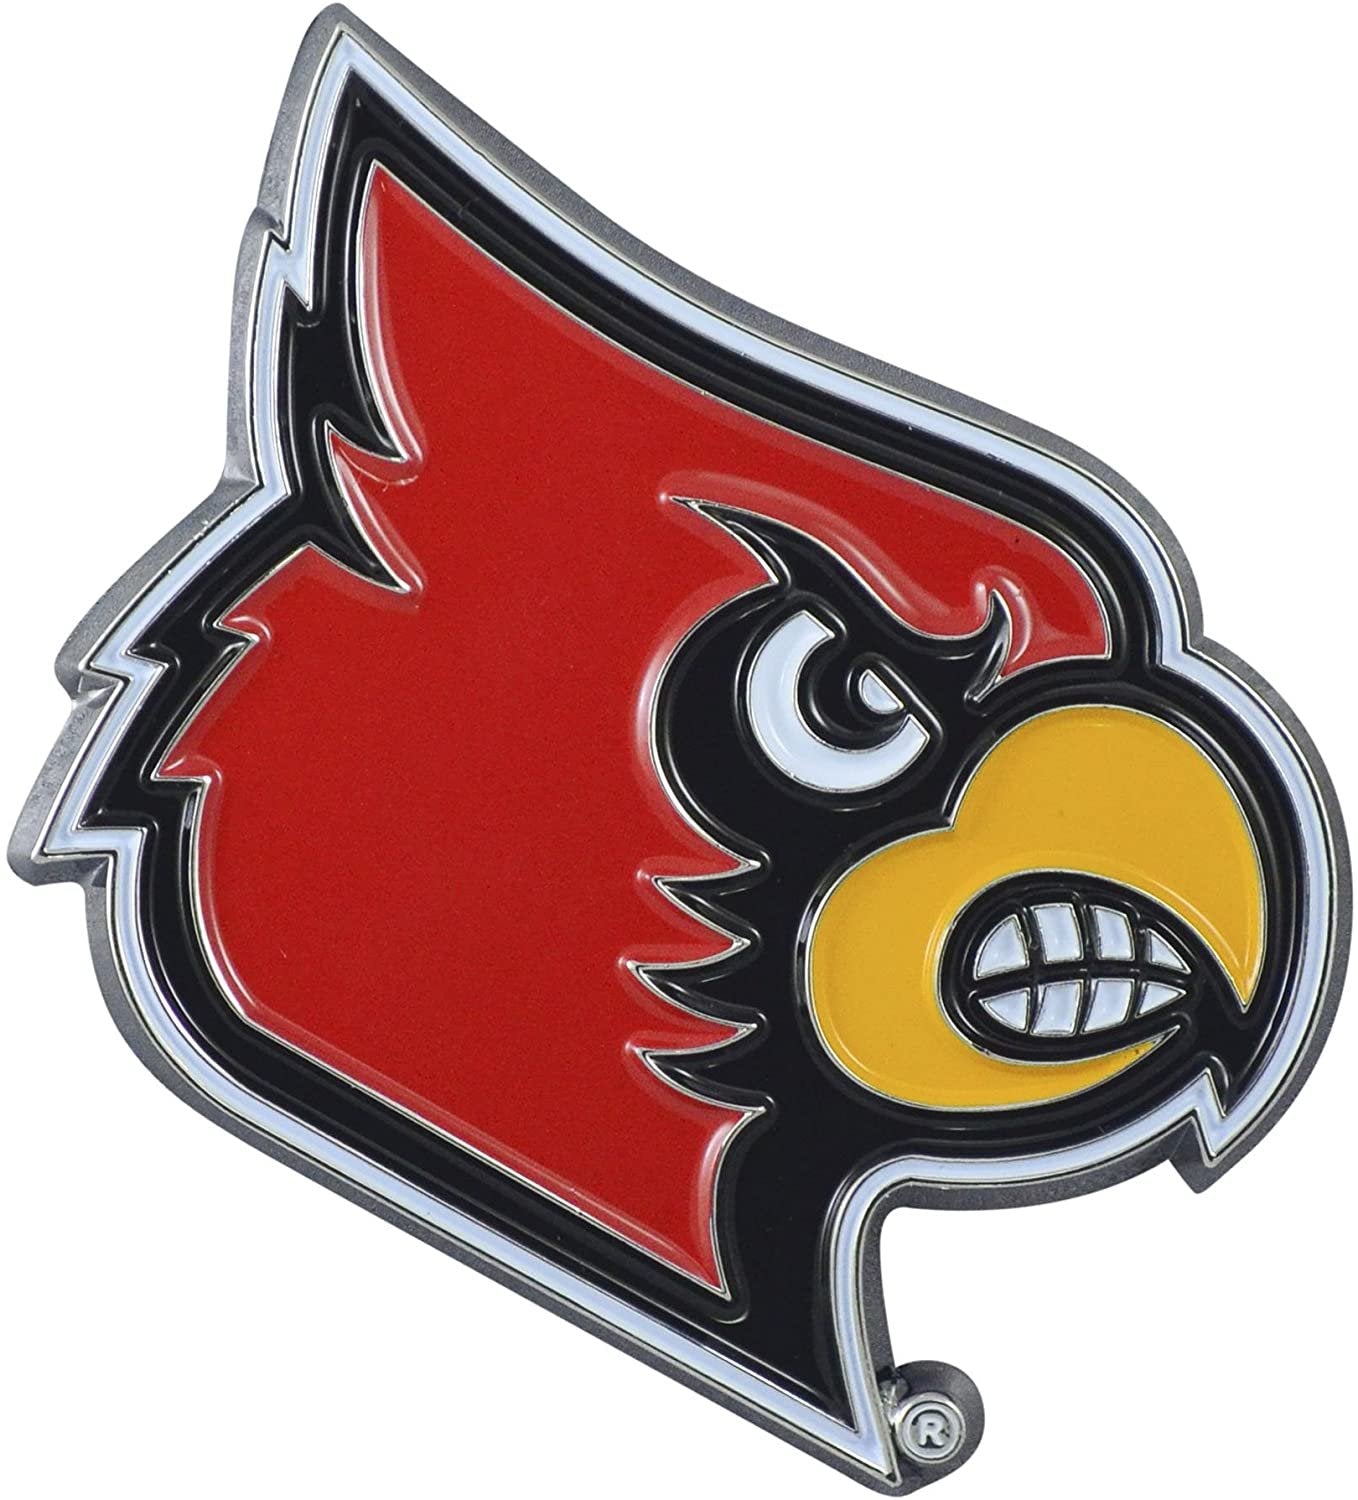 University of Louisville Cardinals Premium Solid Metal Raised Auto Emblem, Team Color, Shape Cut, Adhesive Backing